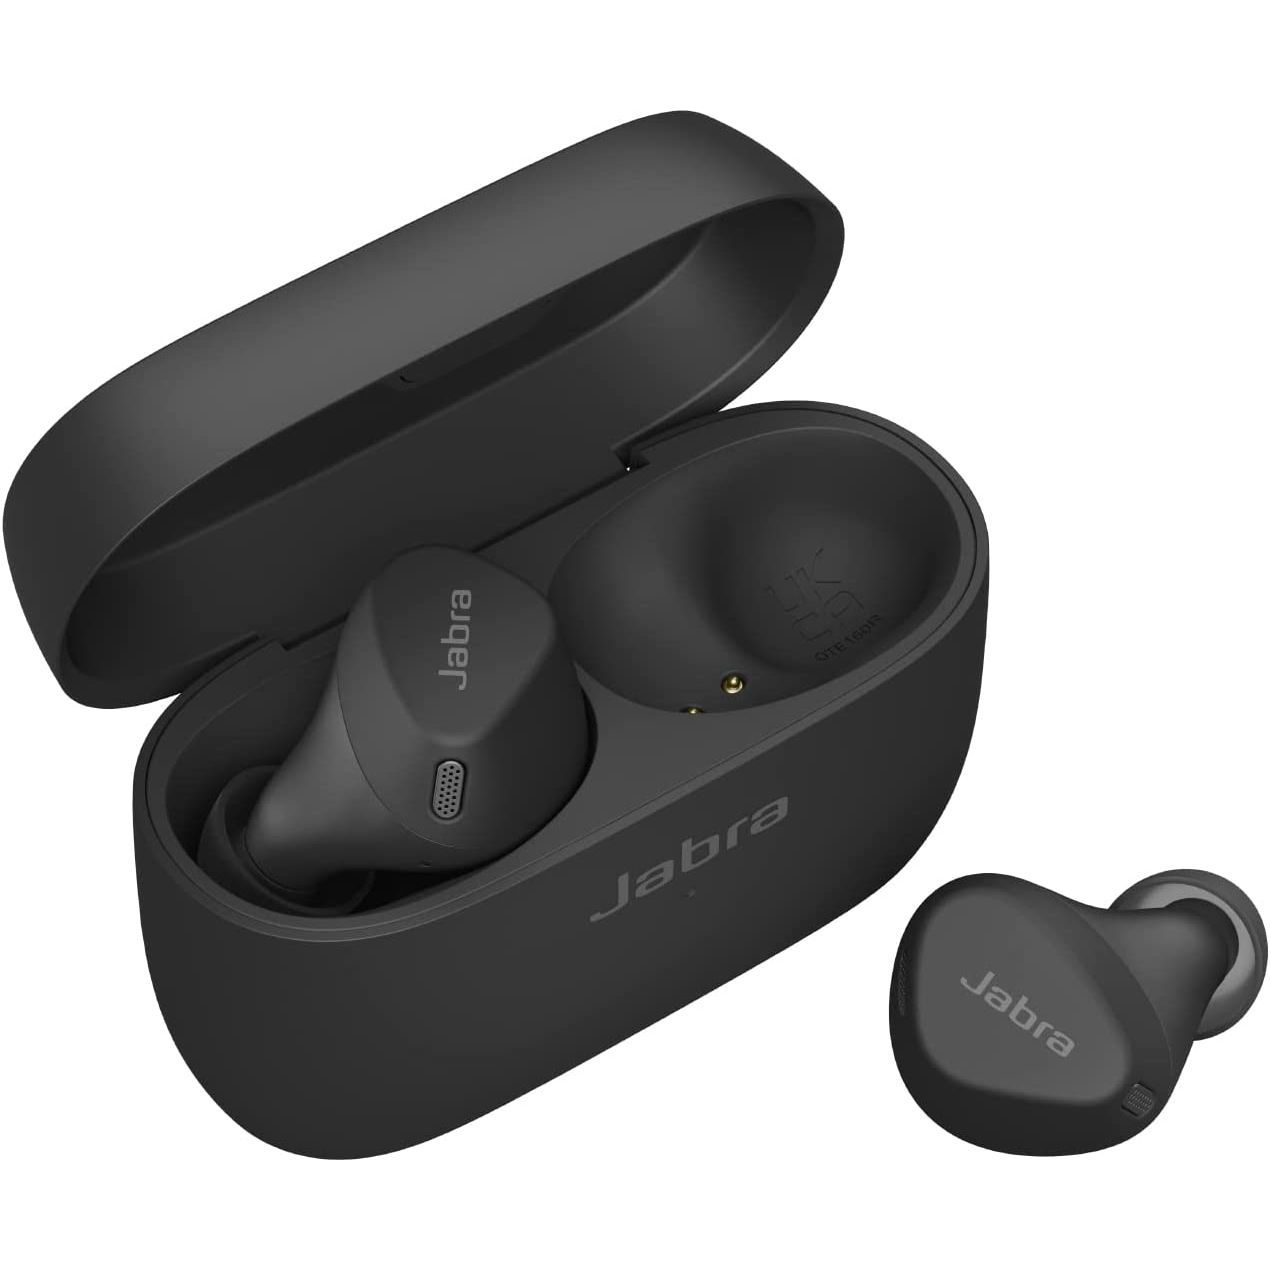 Jabra Elite 4 Active true wireless earbuds